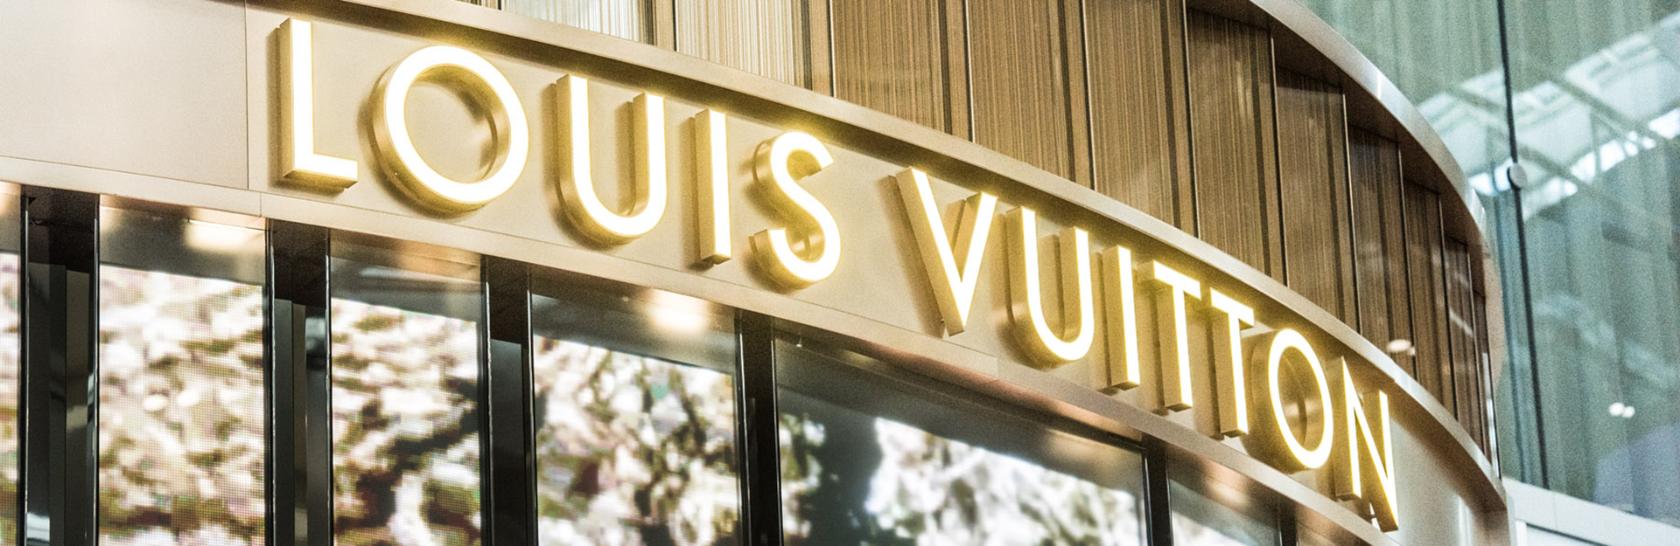 HD wallpaper: Louis Vuitton building during golden hour